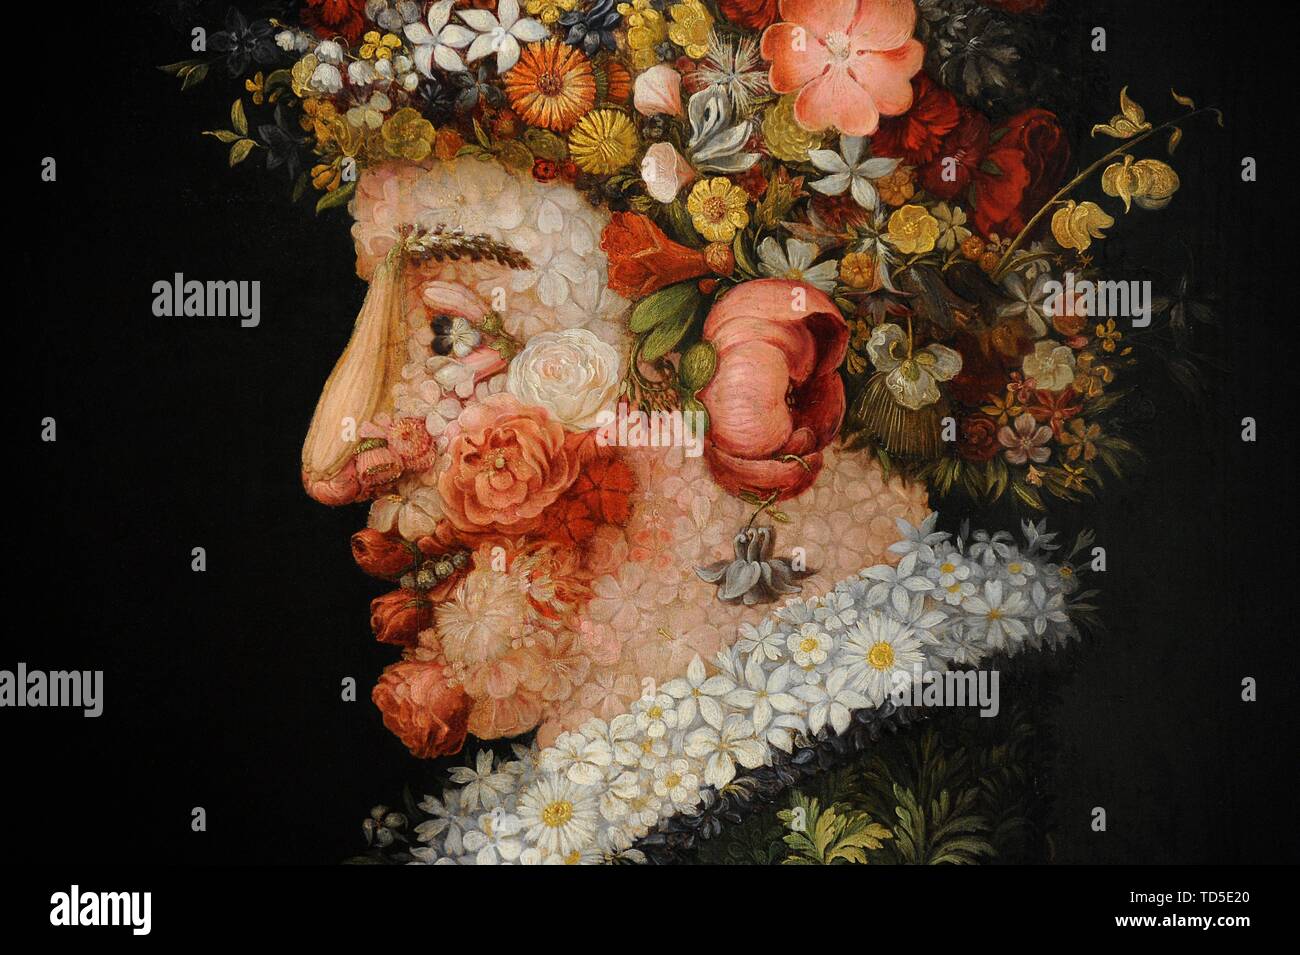 Giuseppe Arcimboldo (1527-1593). Pintor italiano. La Primavera, hacia 1563. Detalle. Óleo sobre tabla. 0,66 x 0,50 m. Real Academia de Bellas Artes de San Fernando. Madrid. España. Stock Photo